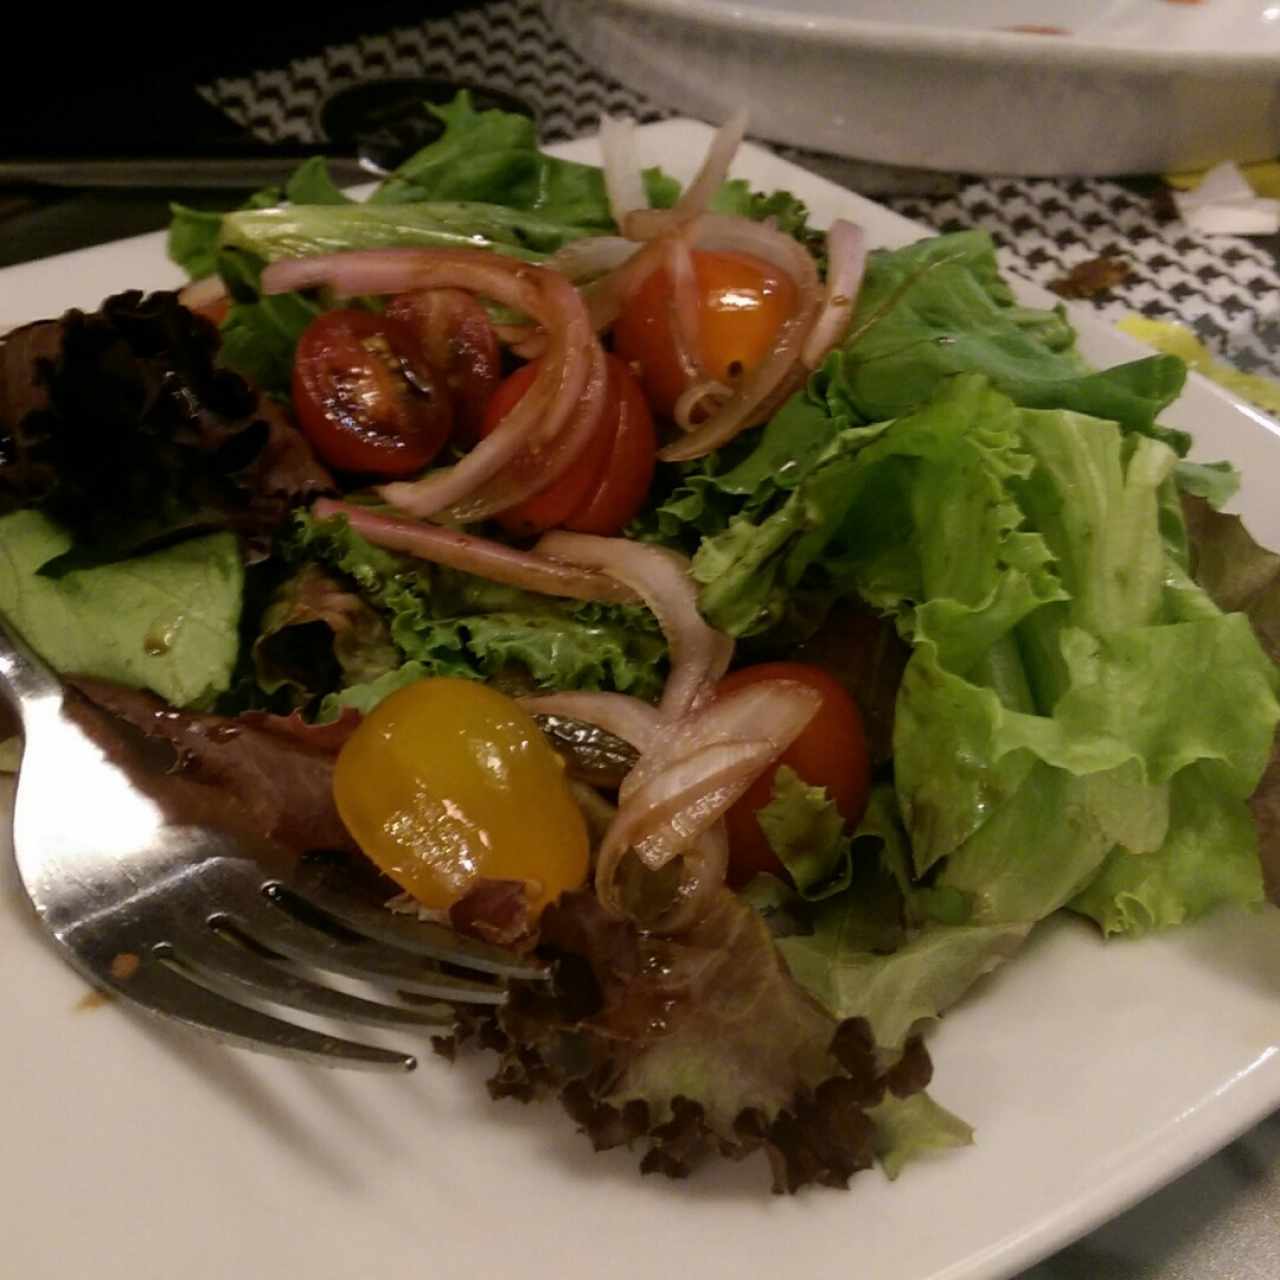 Side salad